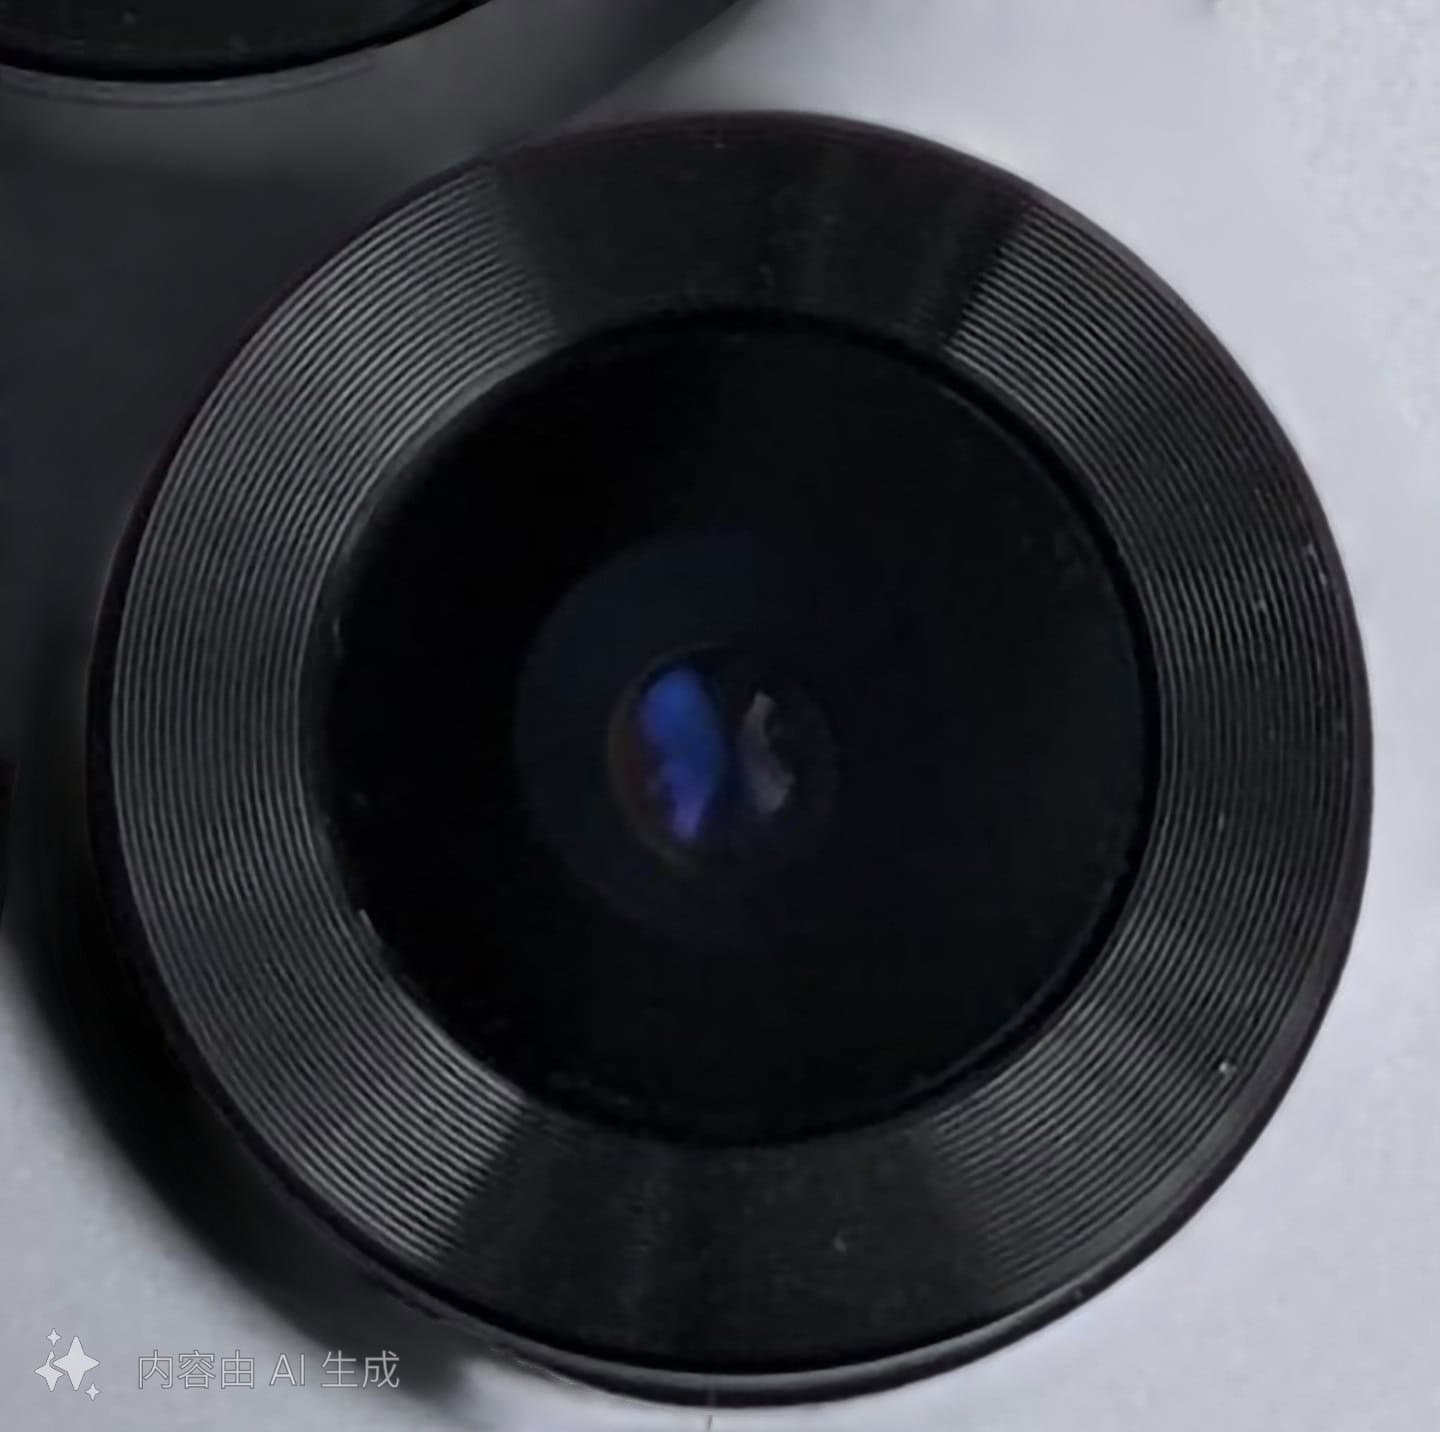 Samsung Galaxy Z Fold 6 camera ring design leak